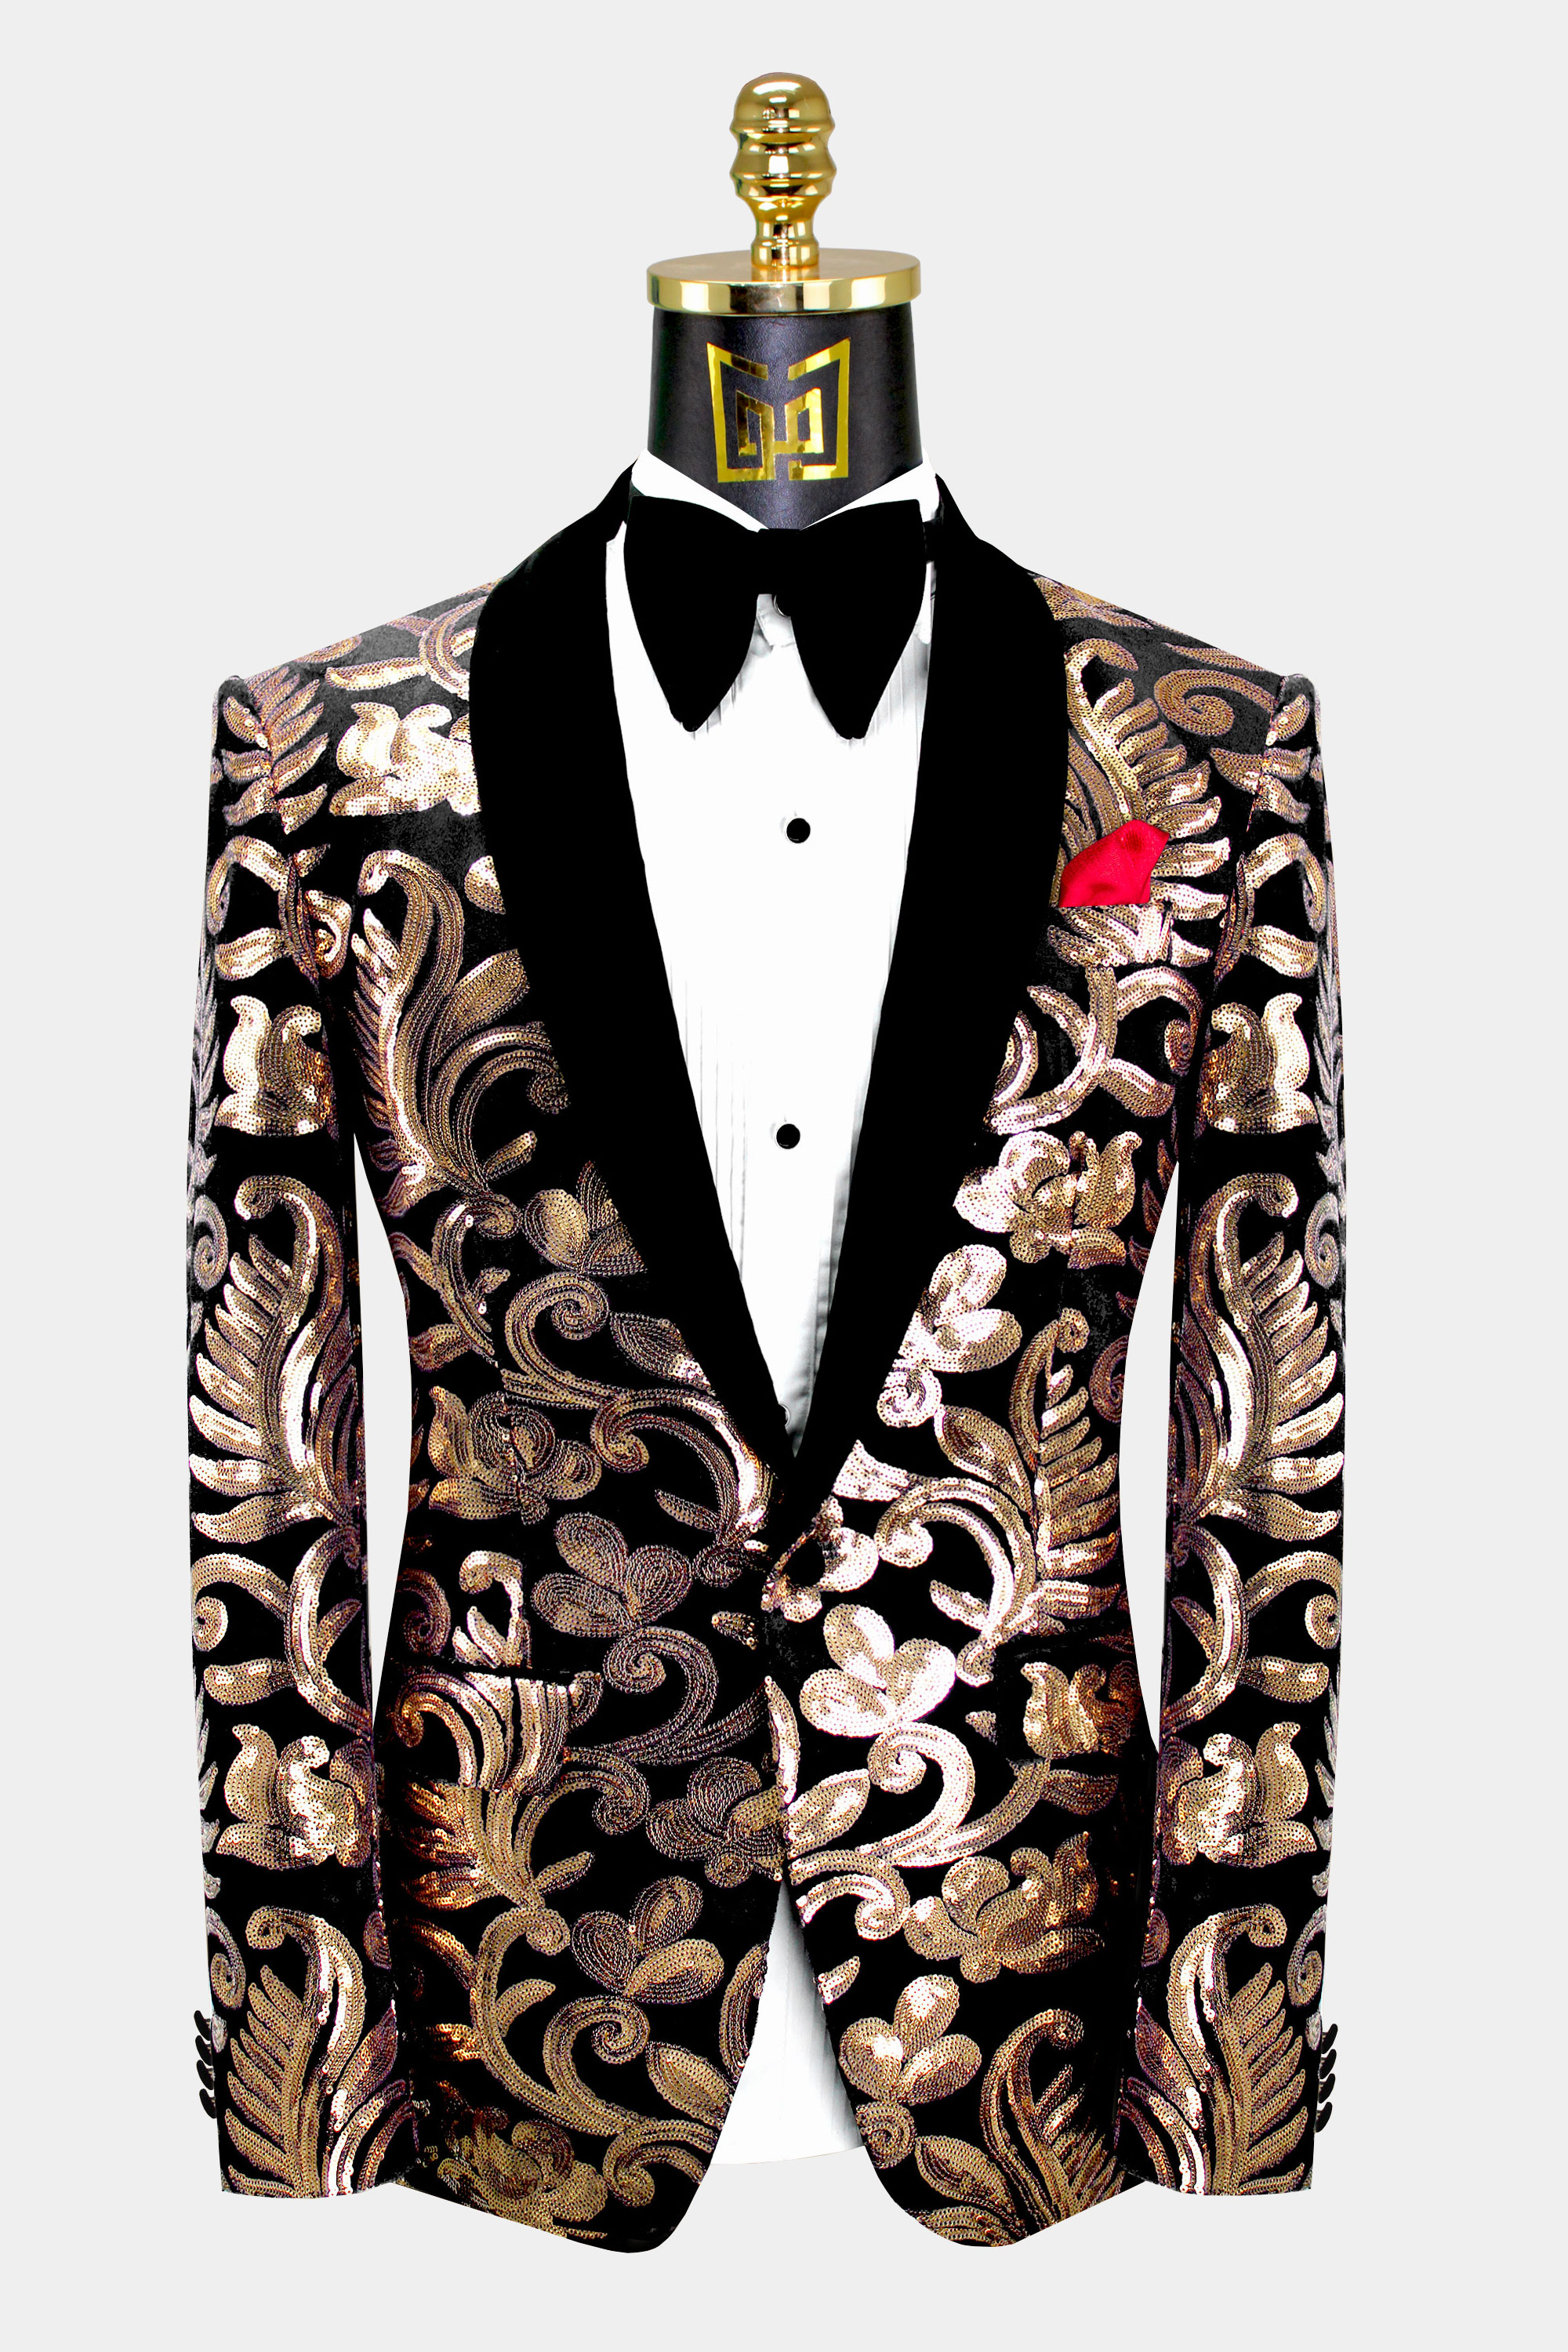 Mens-Black-and-Gold-Tuxedo-Jacket-Prom-Wedding-Blazer-Suit-from-Gentlemansguru.com